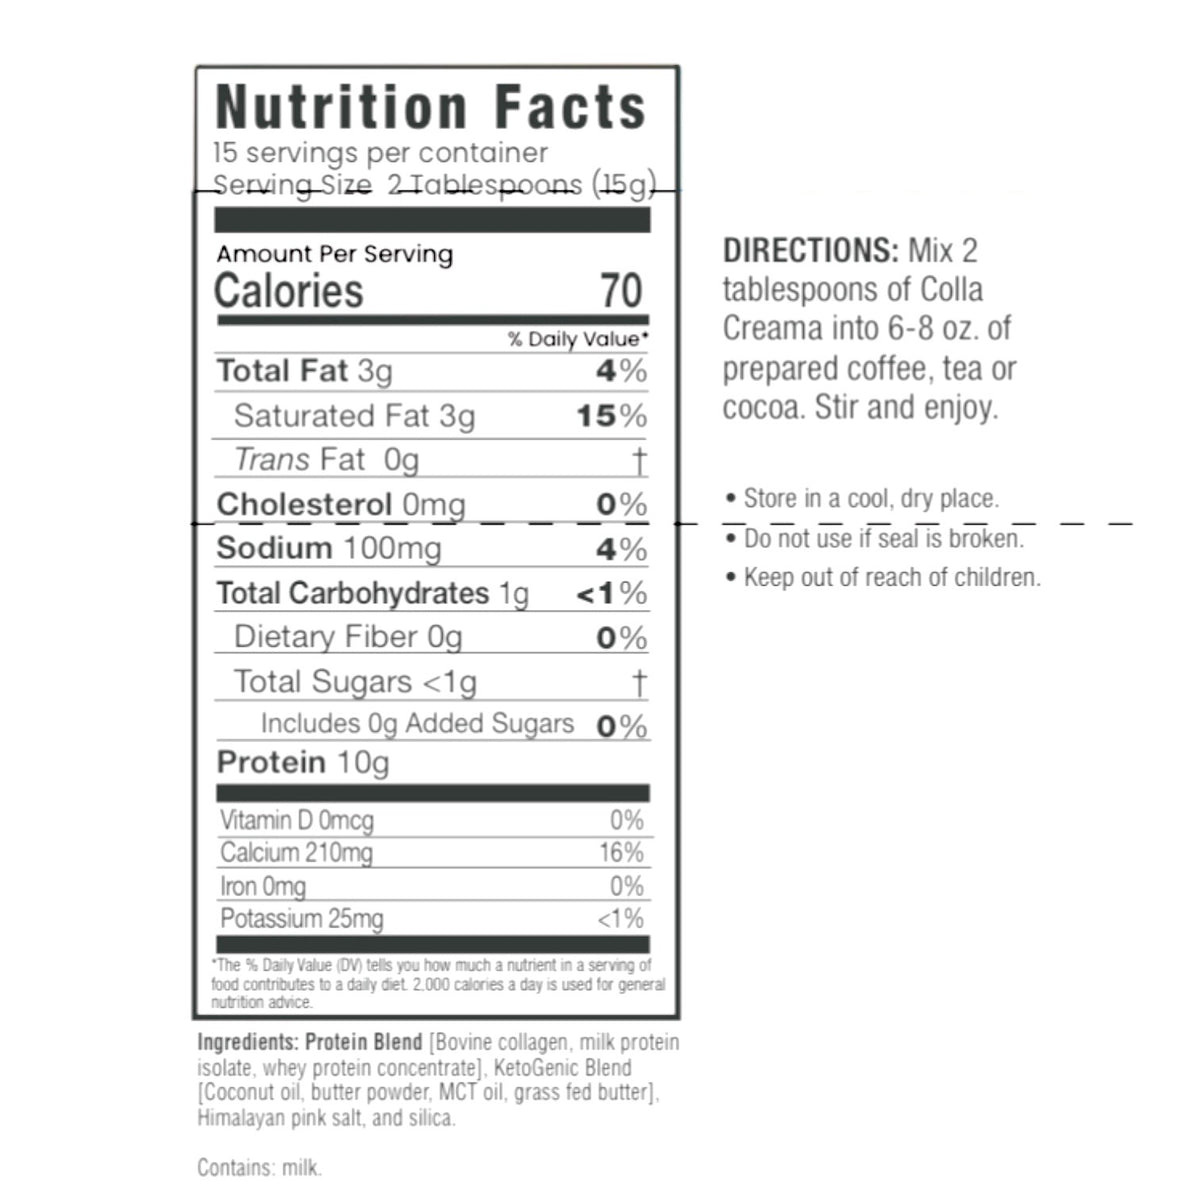 Colla-Creamer nutrition facts